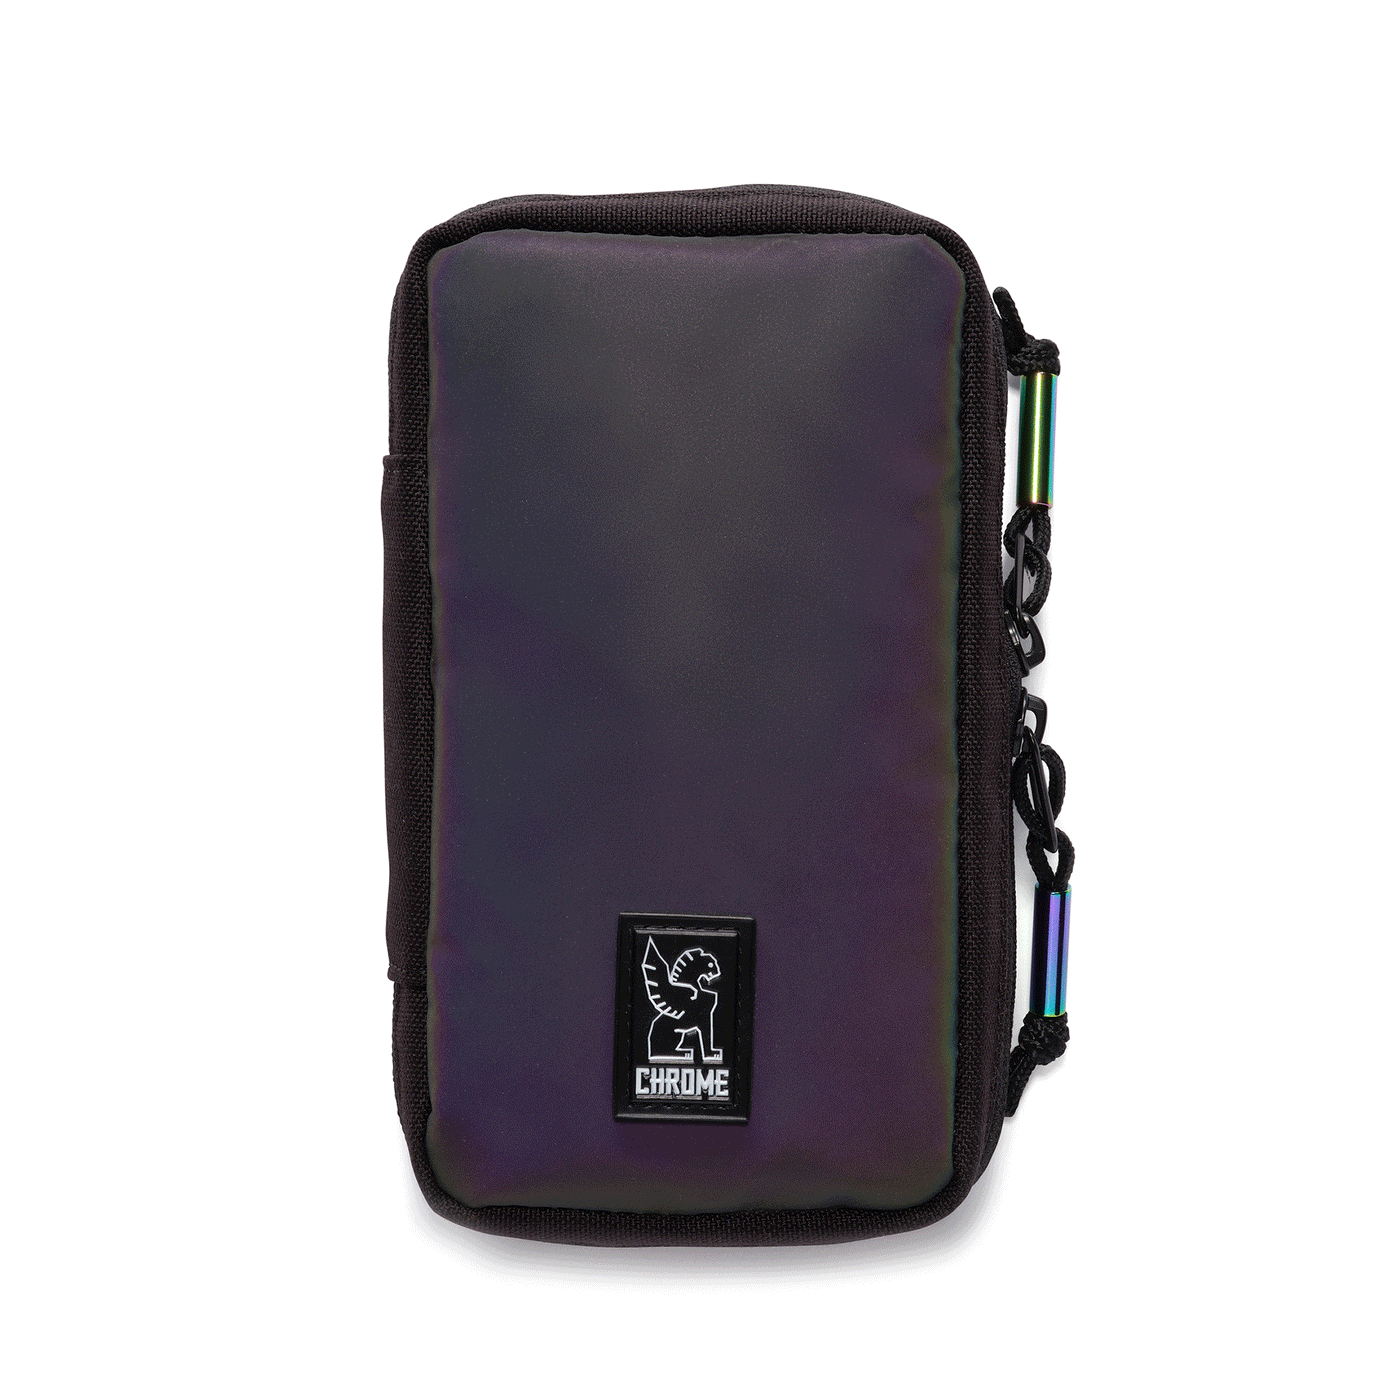 Chrome Buran III messenger bag review - a big, balanced, versatile  messenger! - The Gadgeteer